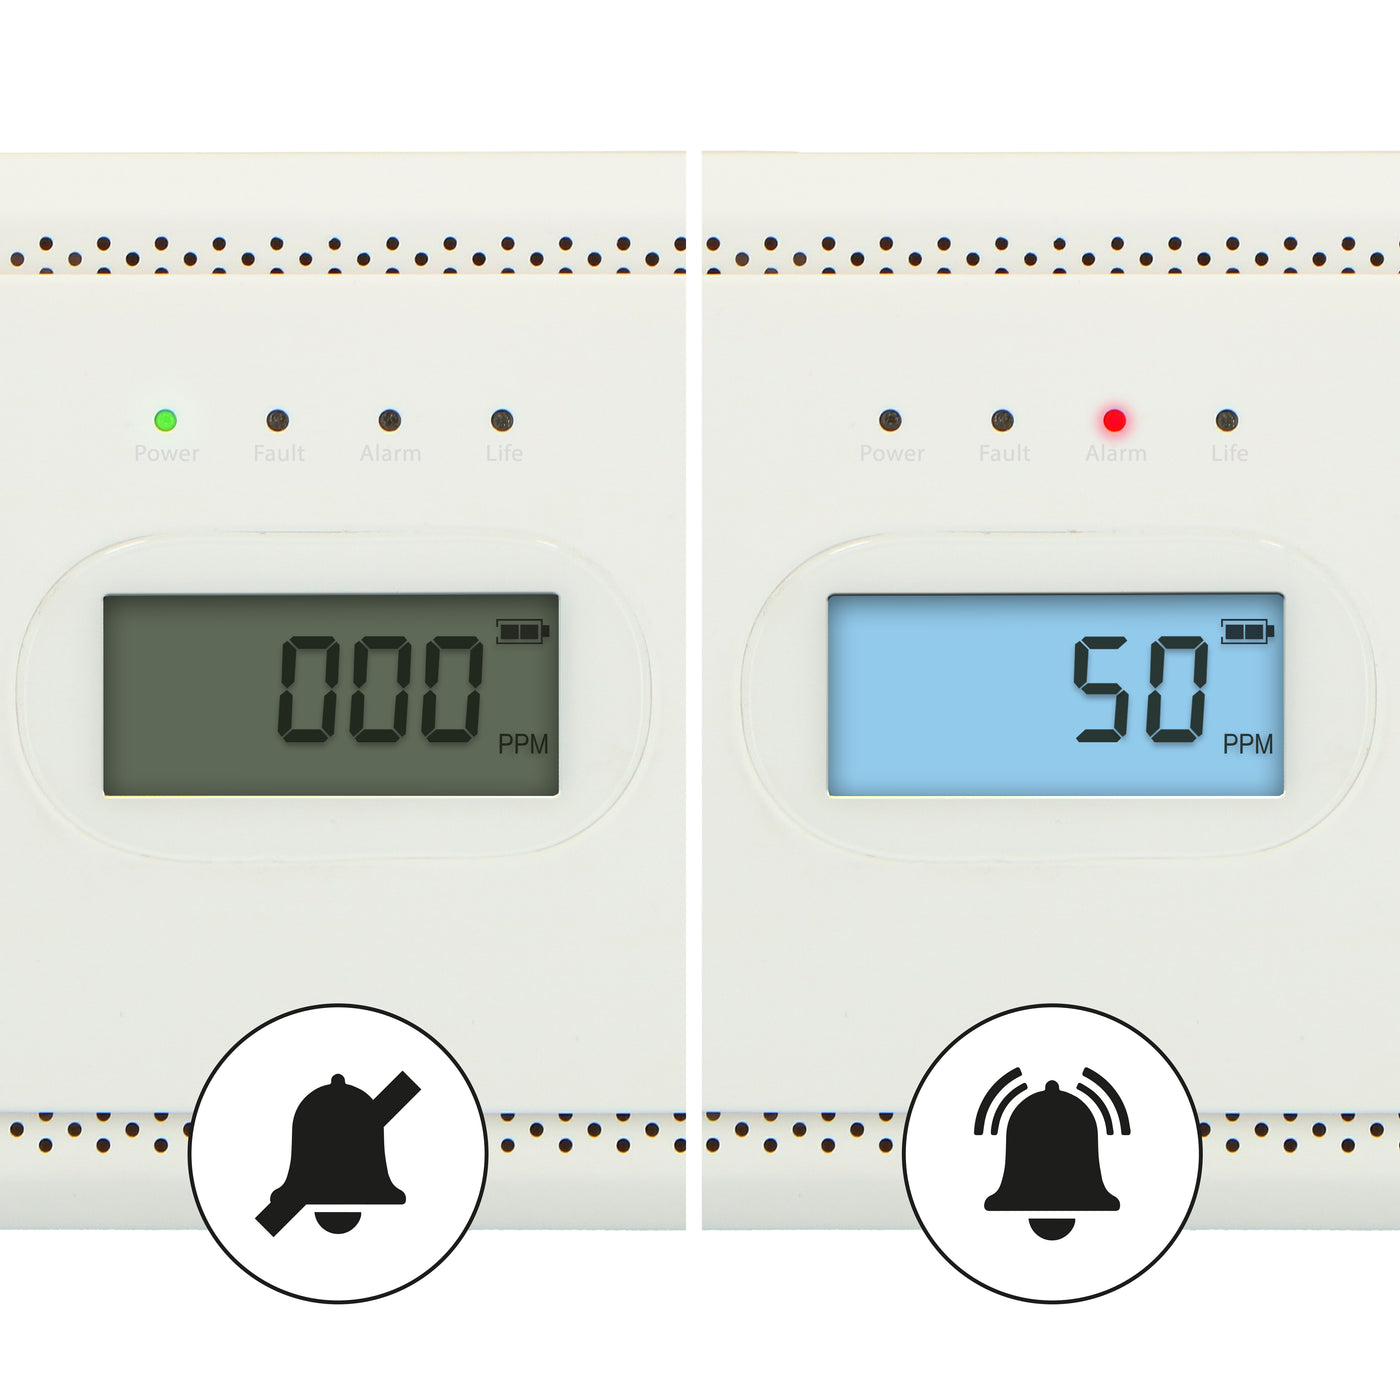 Alecto COA2650 - Carbon monoxide alarm with 10 year sensor runtime and display (successor COA-26)